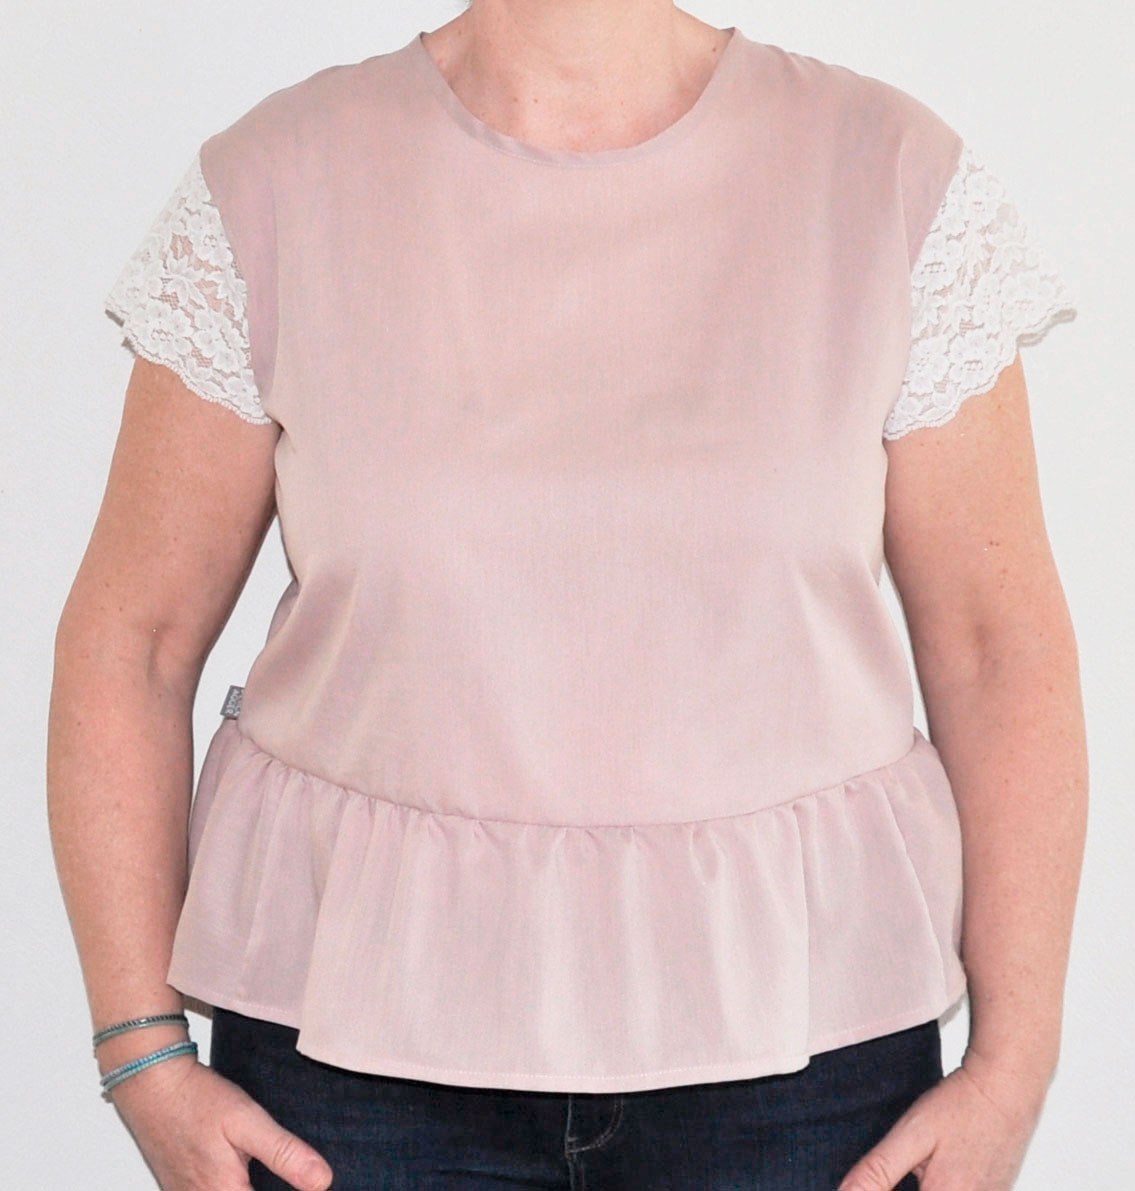 Bluse - Design slow rosa fashion agger upcycled - støvet